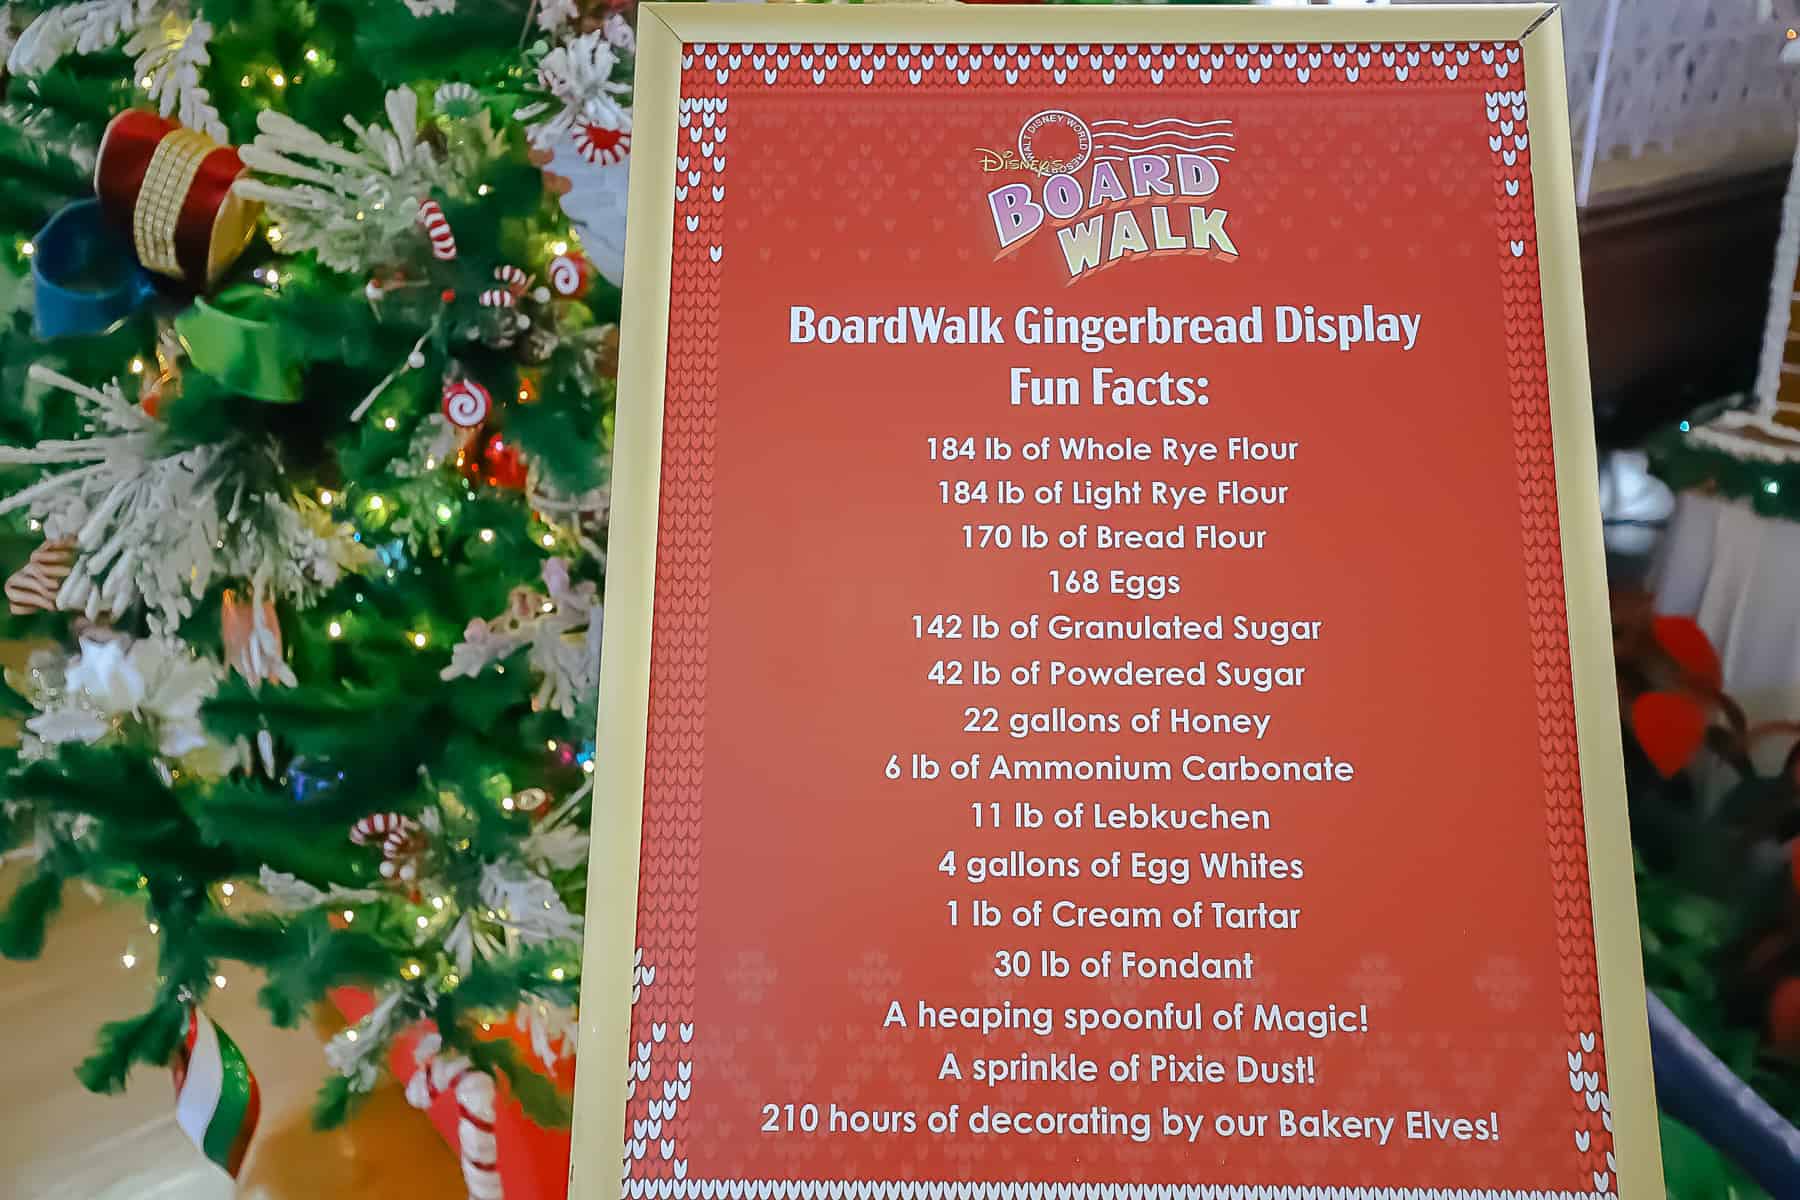 list of ingredients used to create the gingerbread display at Disney's Boardwalk